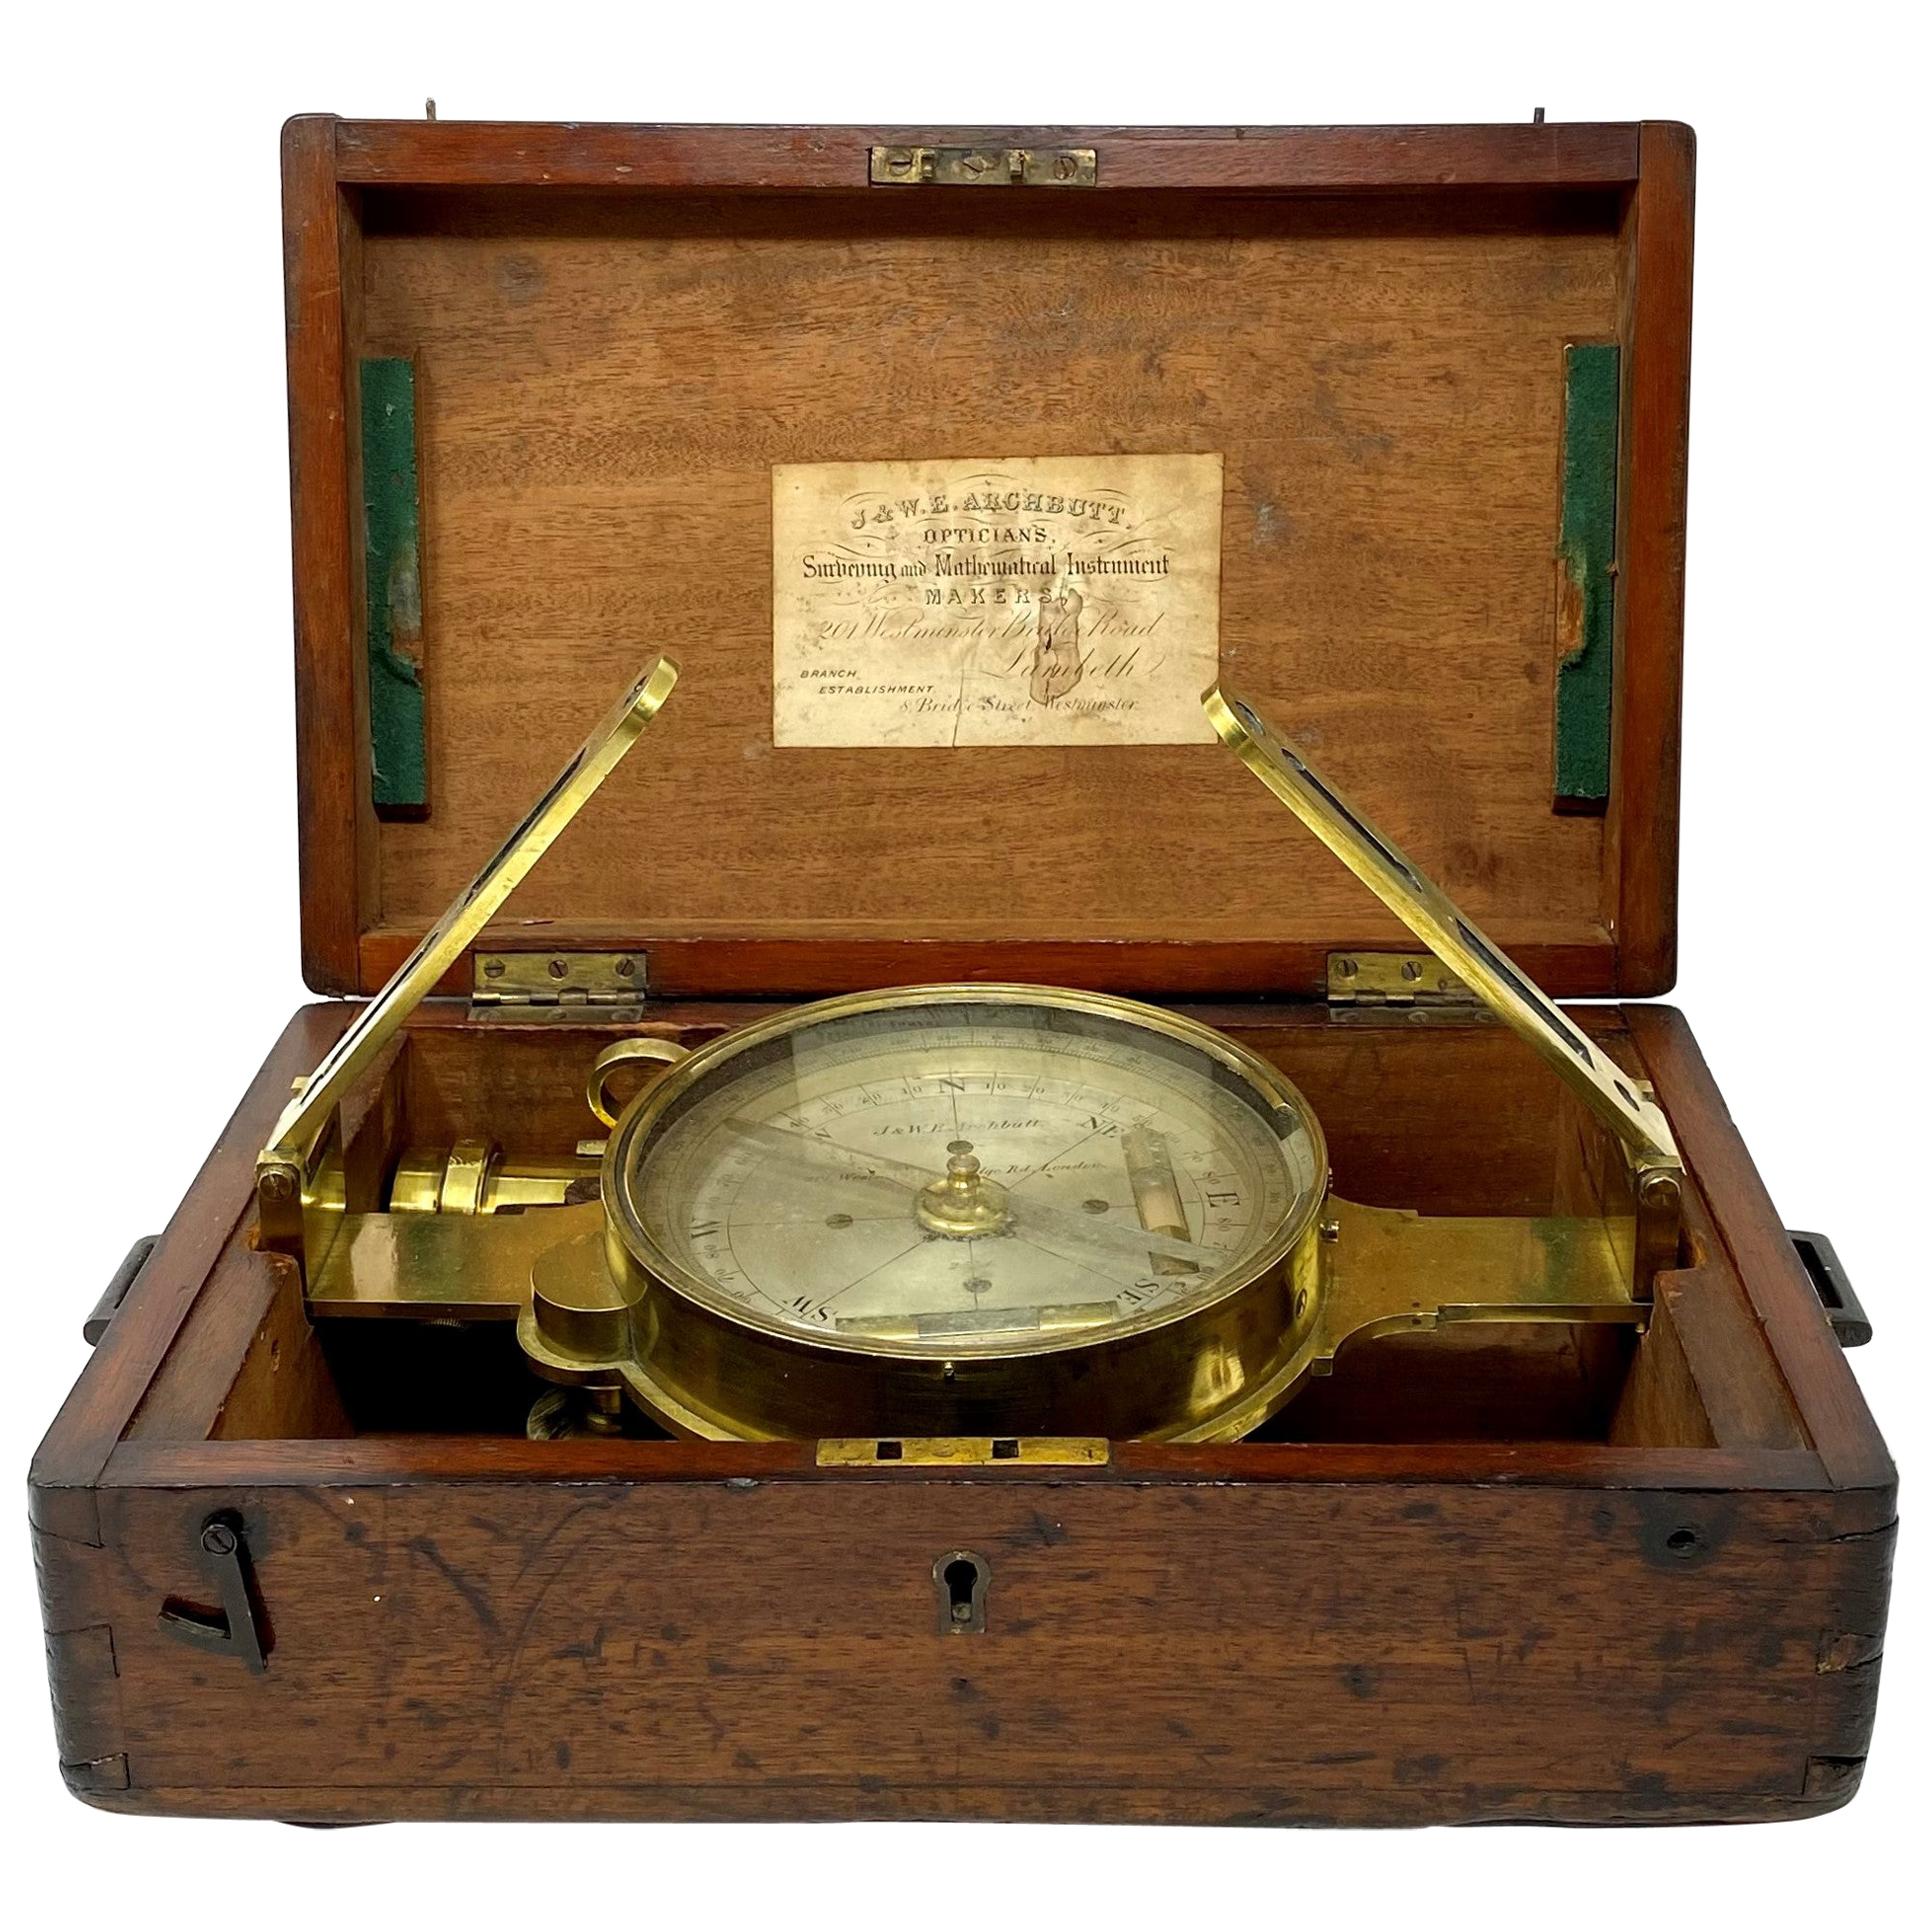 Antique English London-Made Brass Surveying Compass in Original Case, circa 1880